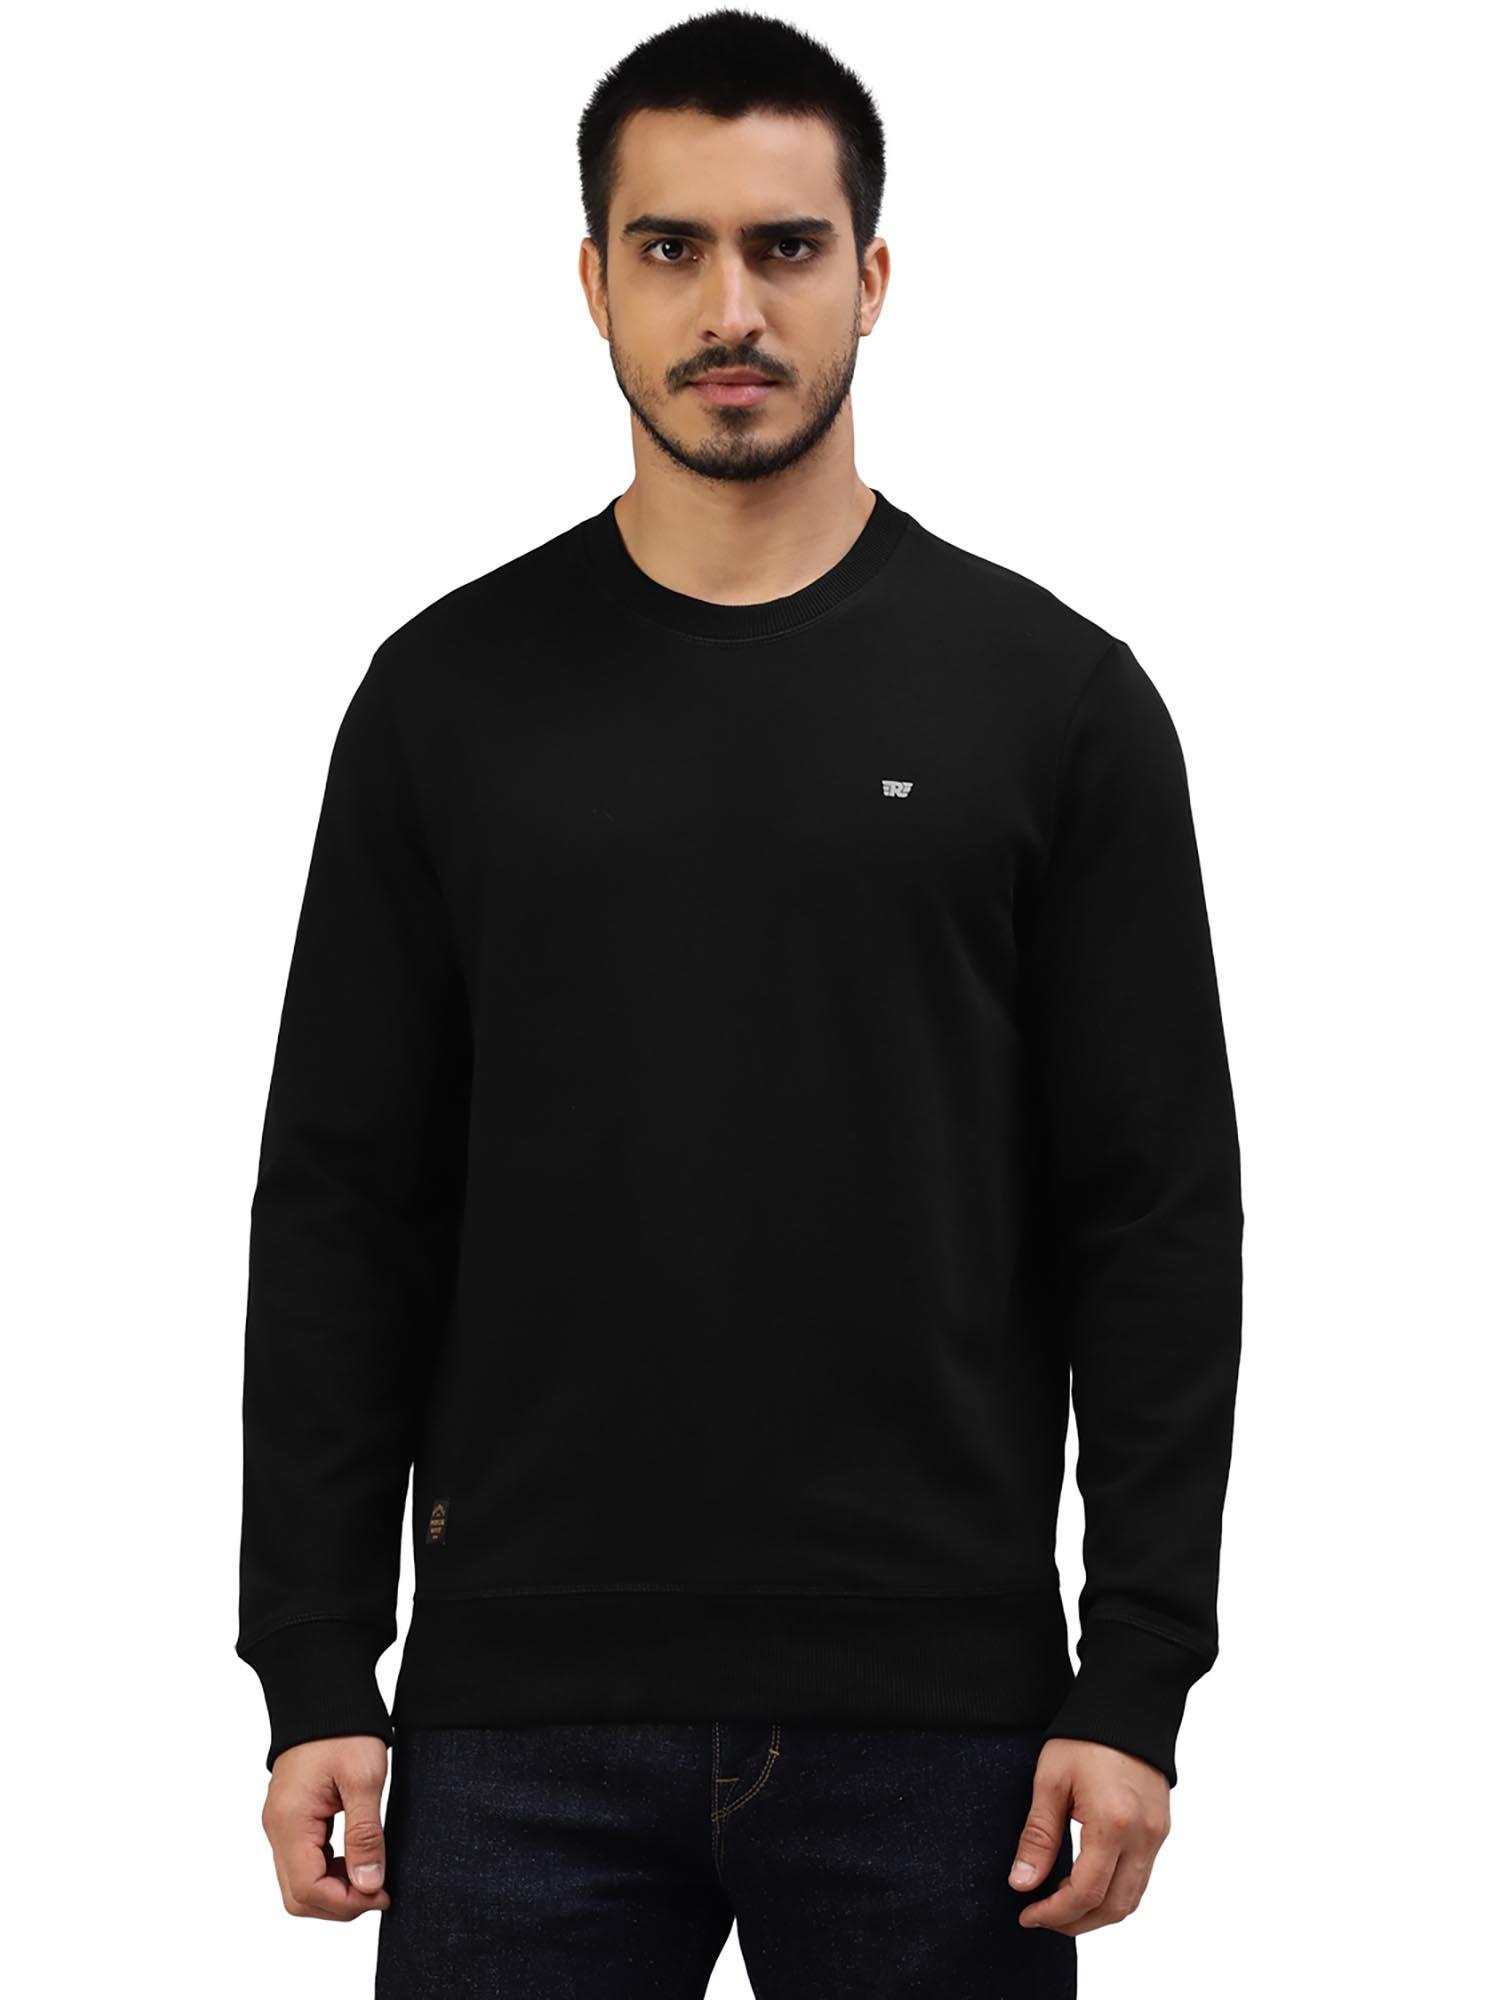 reflective branded sweatshirt black